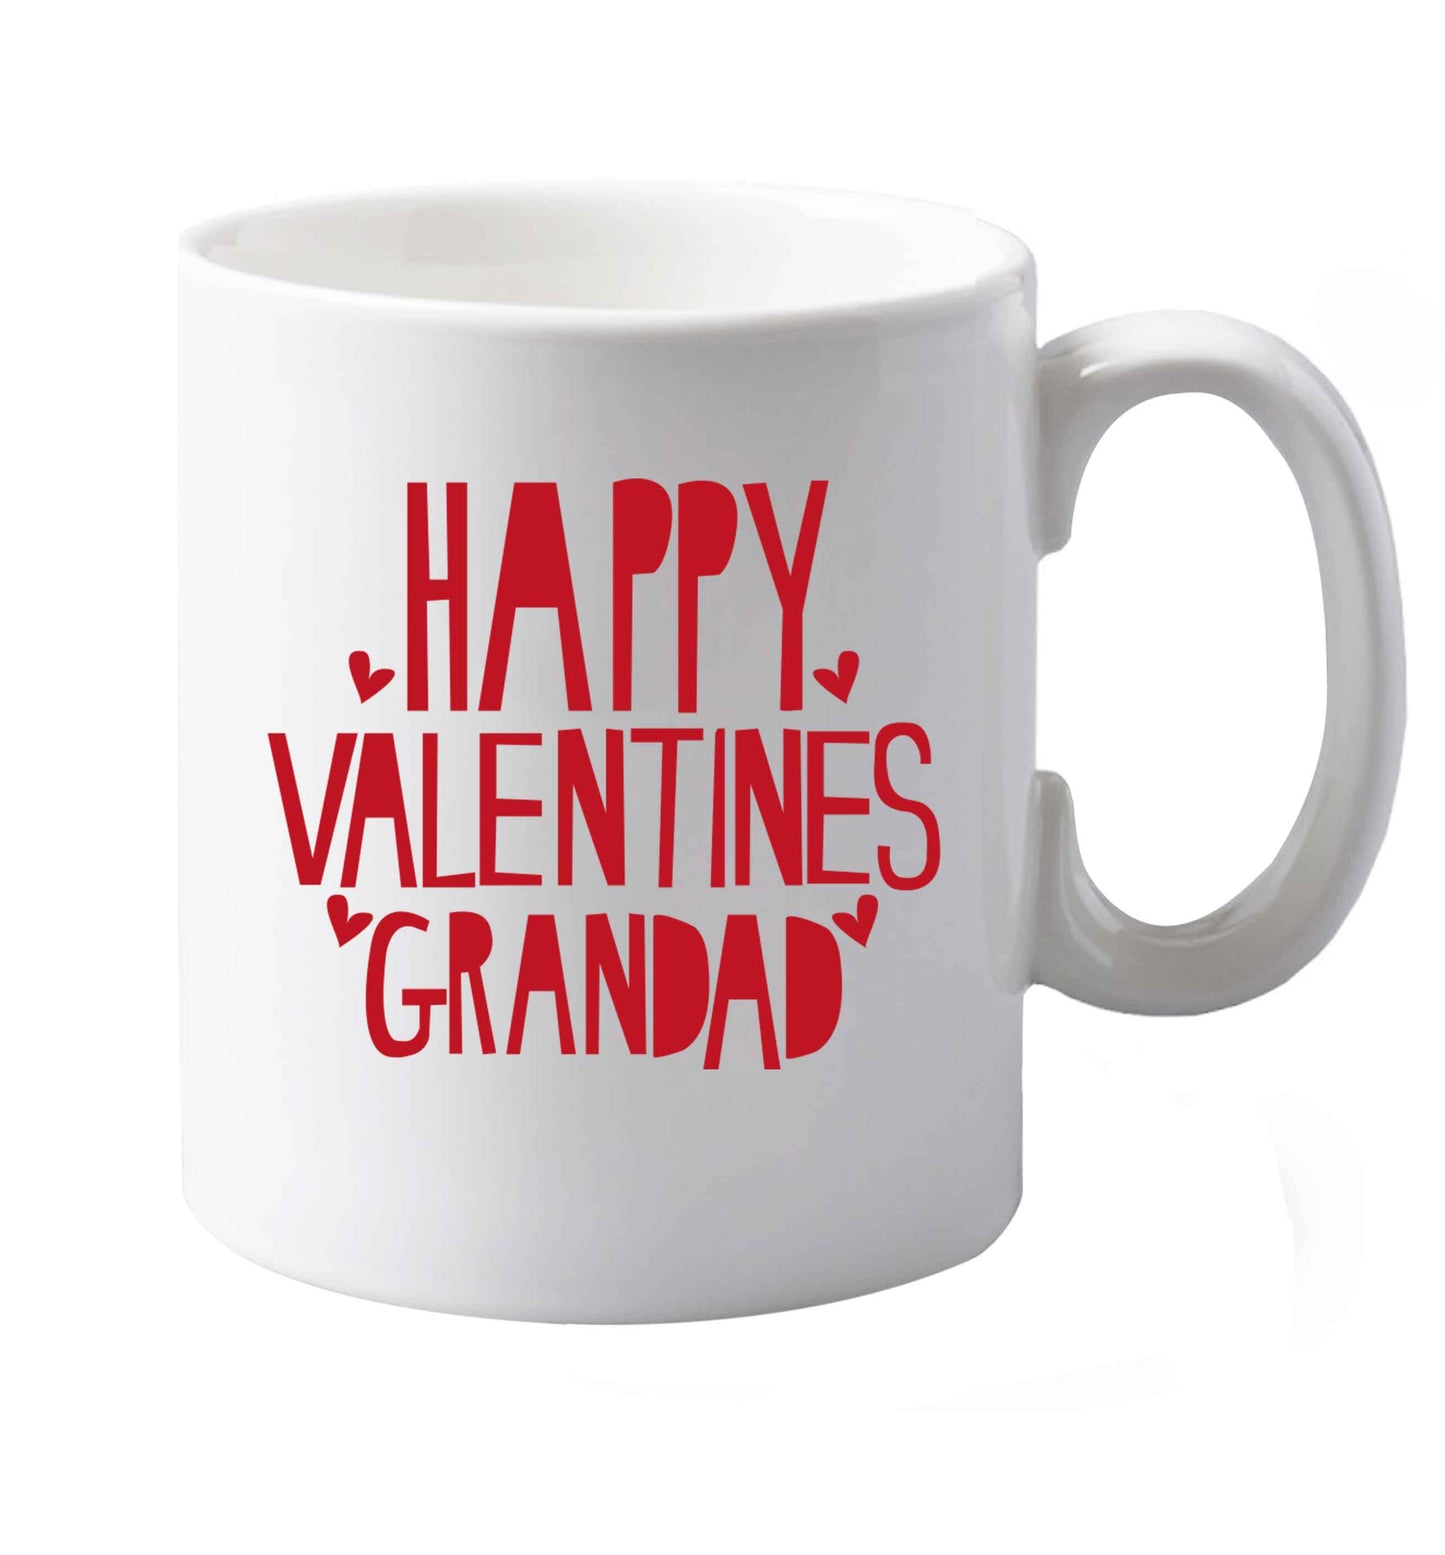 10 oz Happy valentines grandad ceramic mug both sides